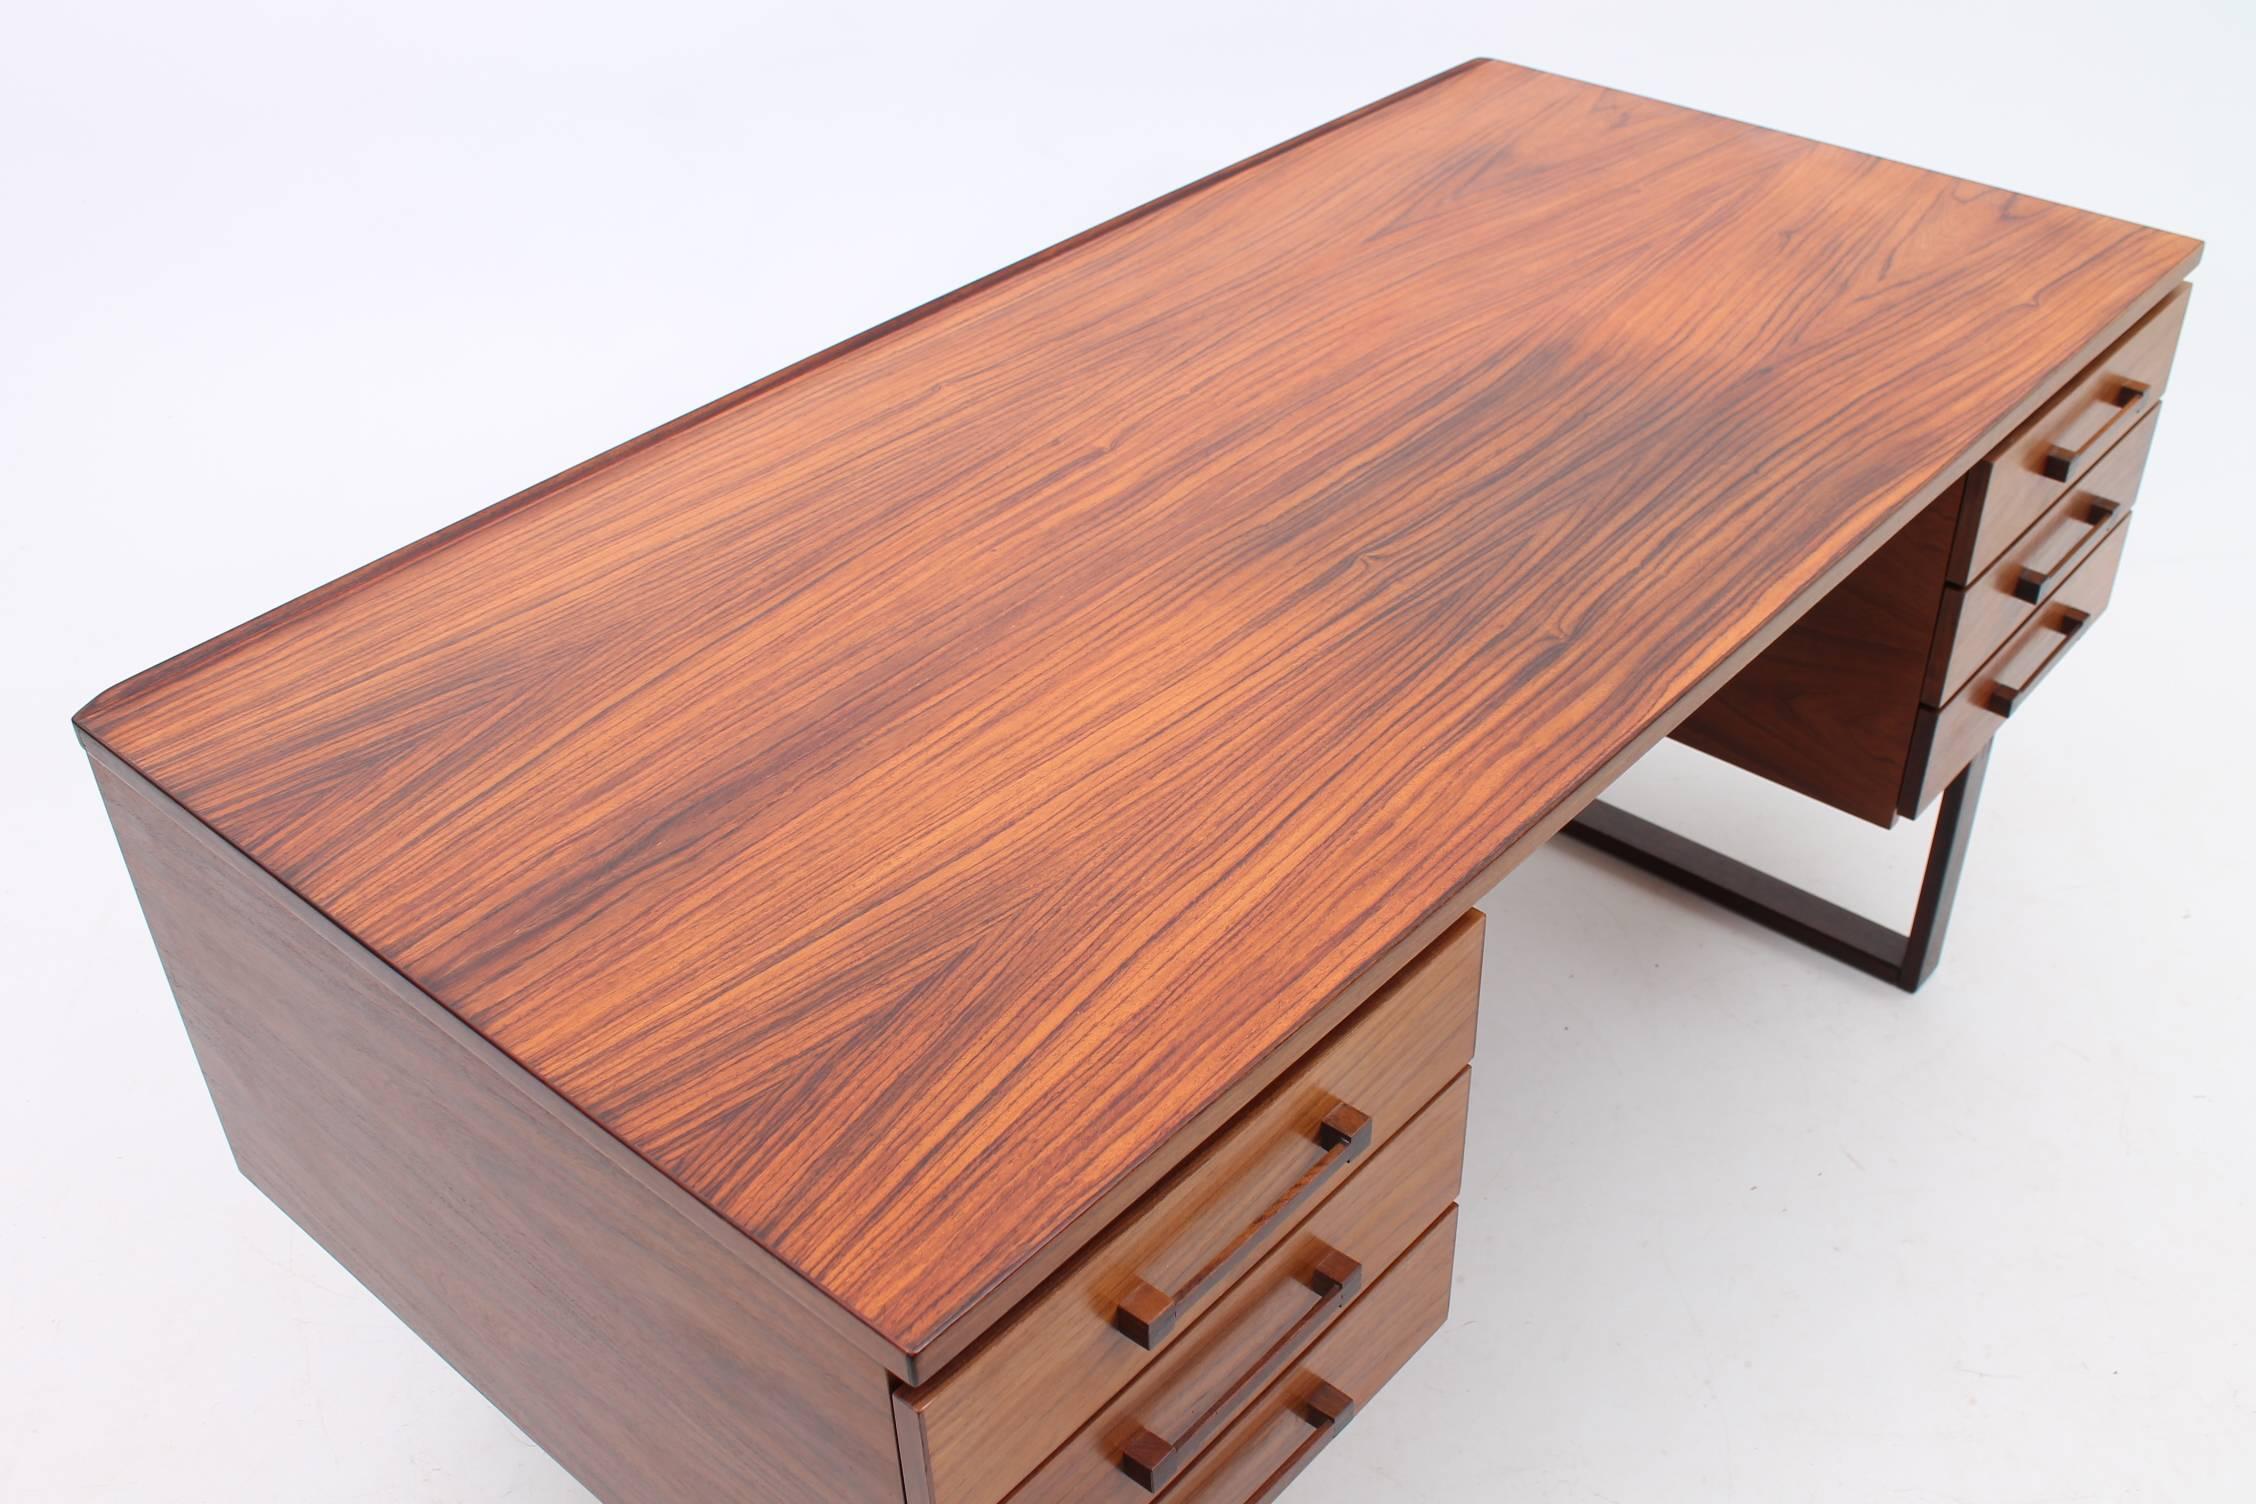 Stained Rosewood Desk by Preben Schou Andersen for PSA Furniture, Scandinavian Modern